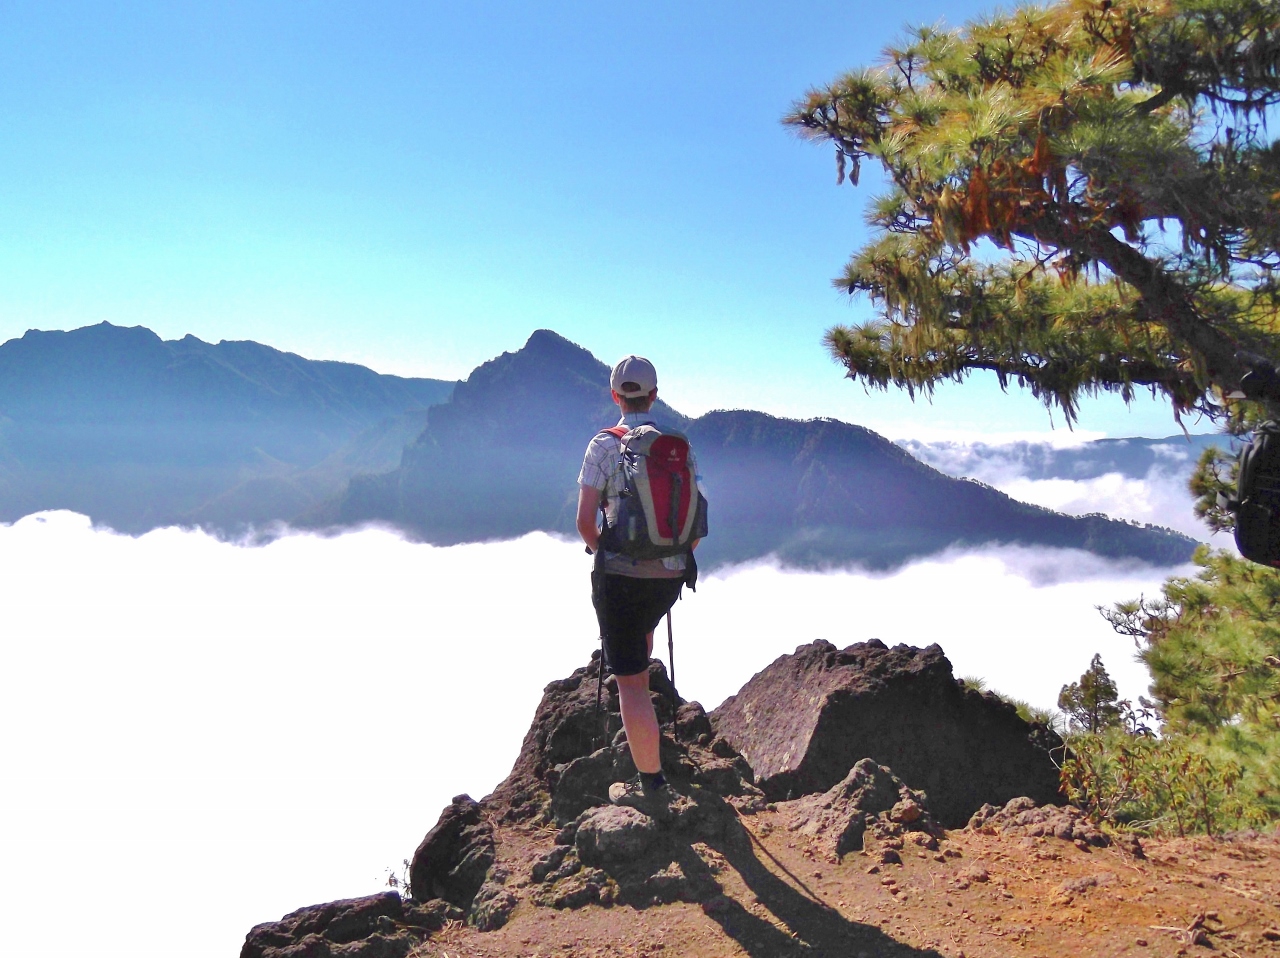 La Palma Canary islands - hiking above the clouds